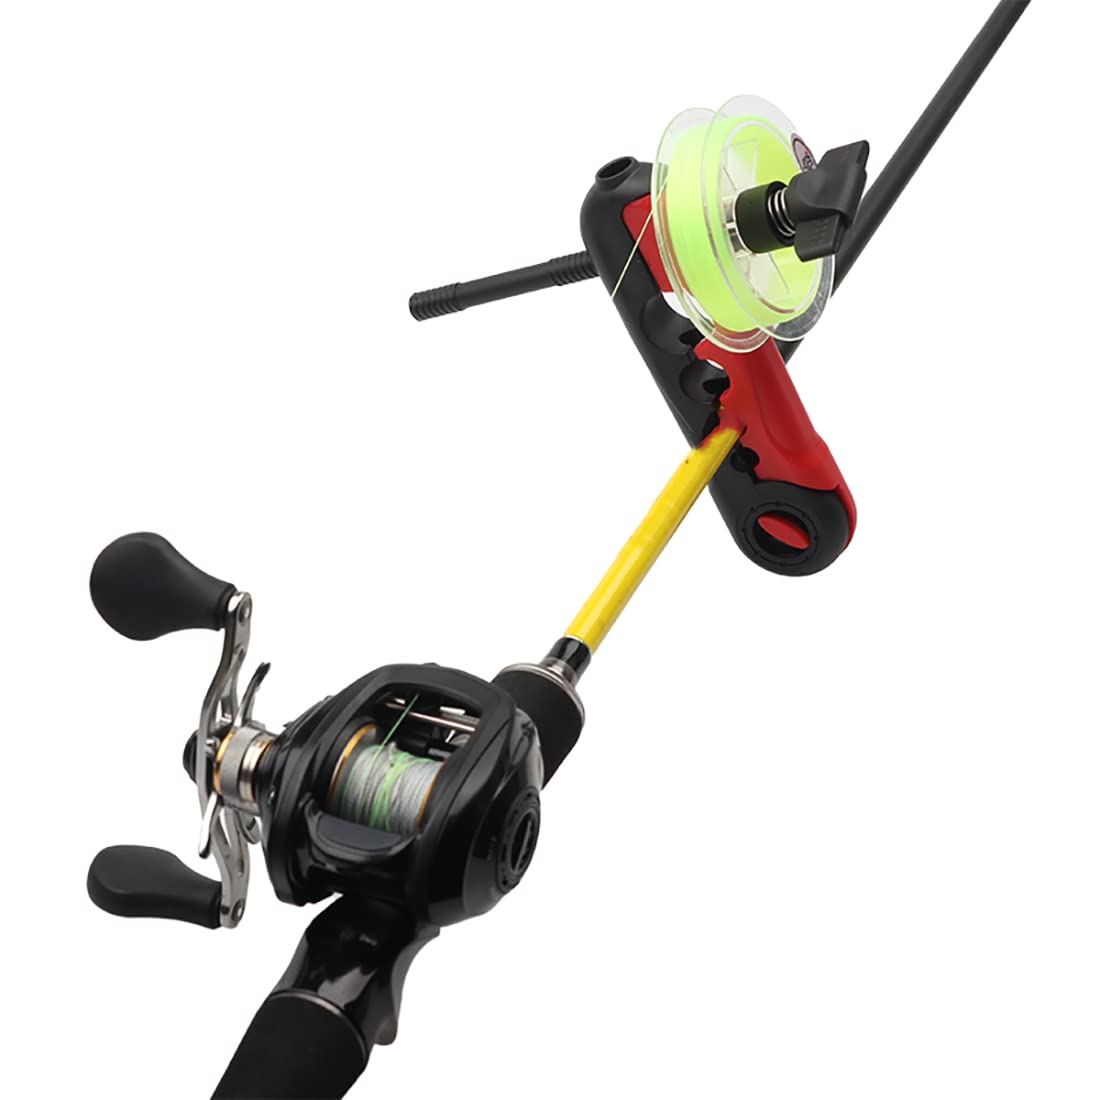 Fishing line Tools, Portable Fishing Line Winder Reel Spool